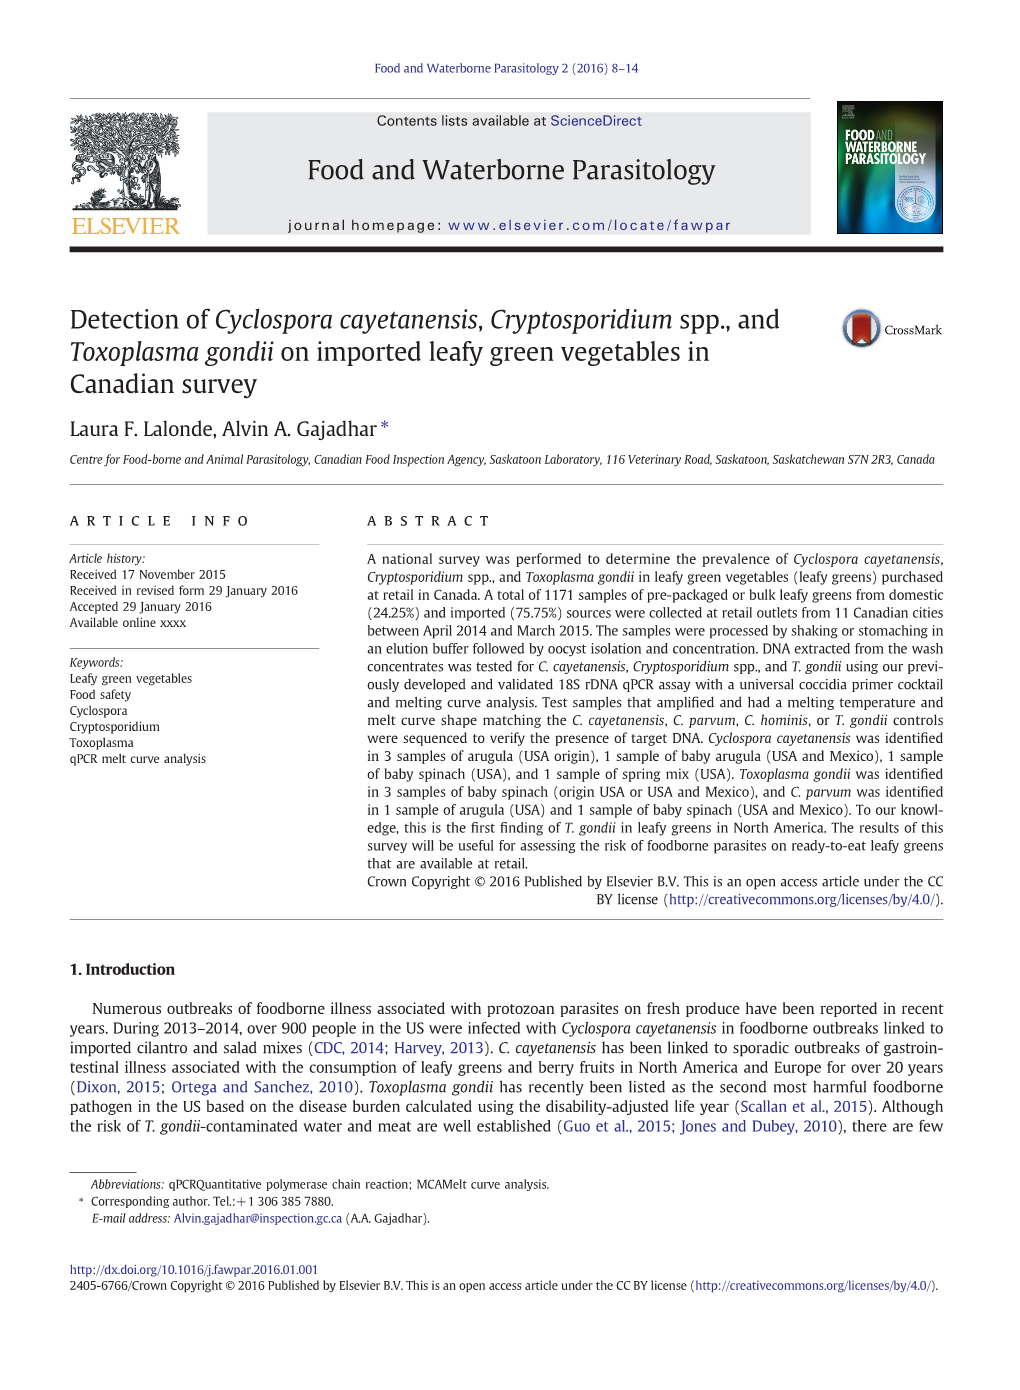 Detection of Cyclospora Cayetanensis, Cryptosporidium Spp., and Toxoplasma Gondii on Imported Leafy Green Vegetables in Canadian Survey